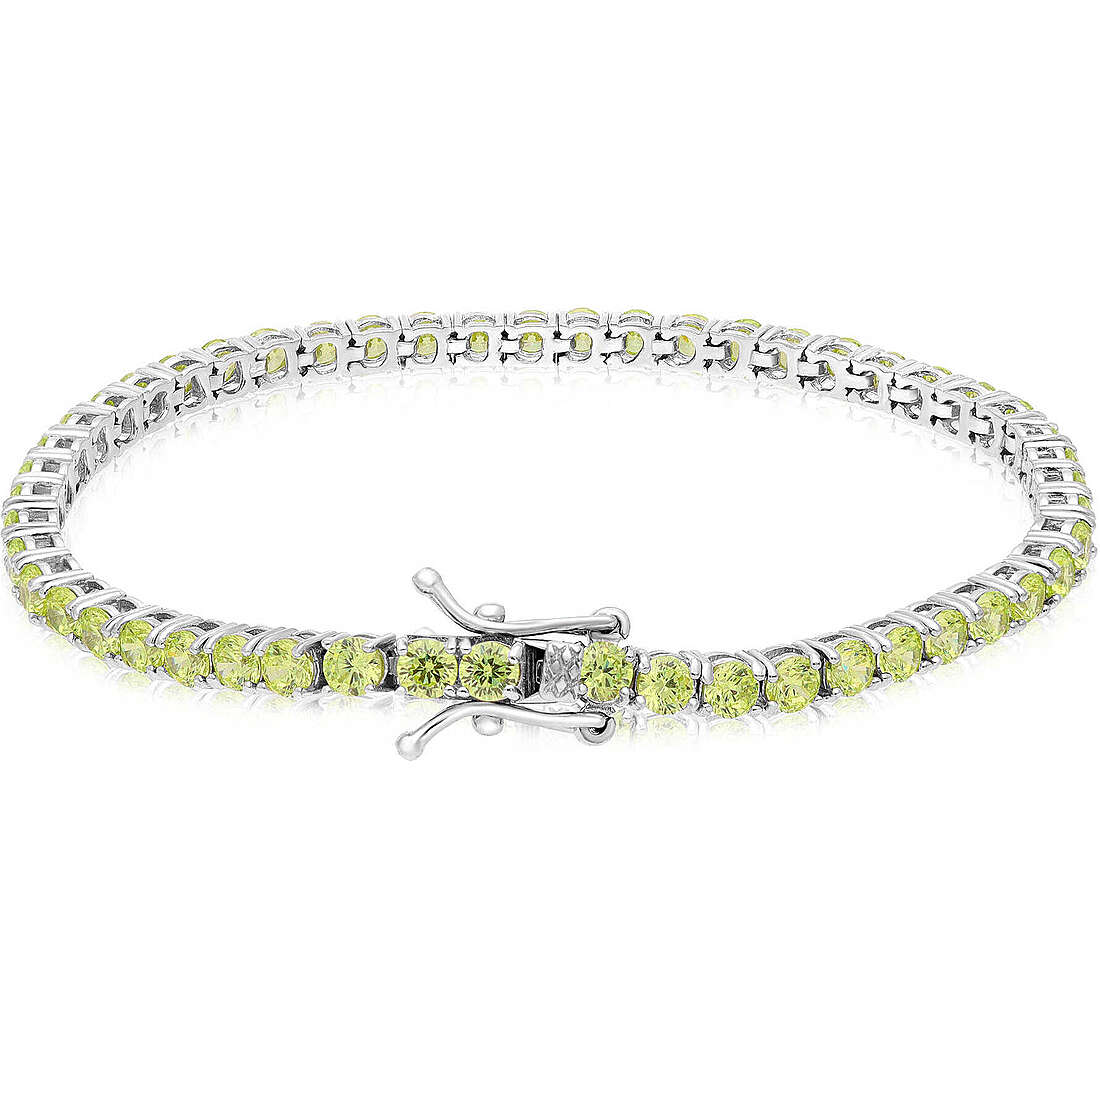 bracelet femme Tennis Argent 925 bijou GioiaPura Tennis Club INS091BR037RHPE-17